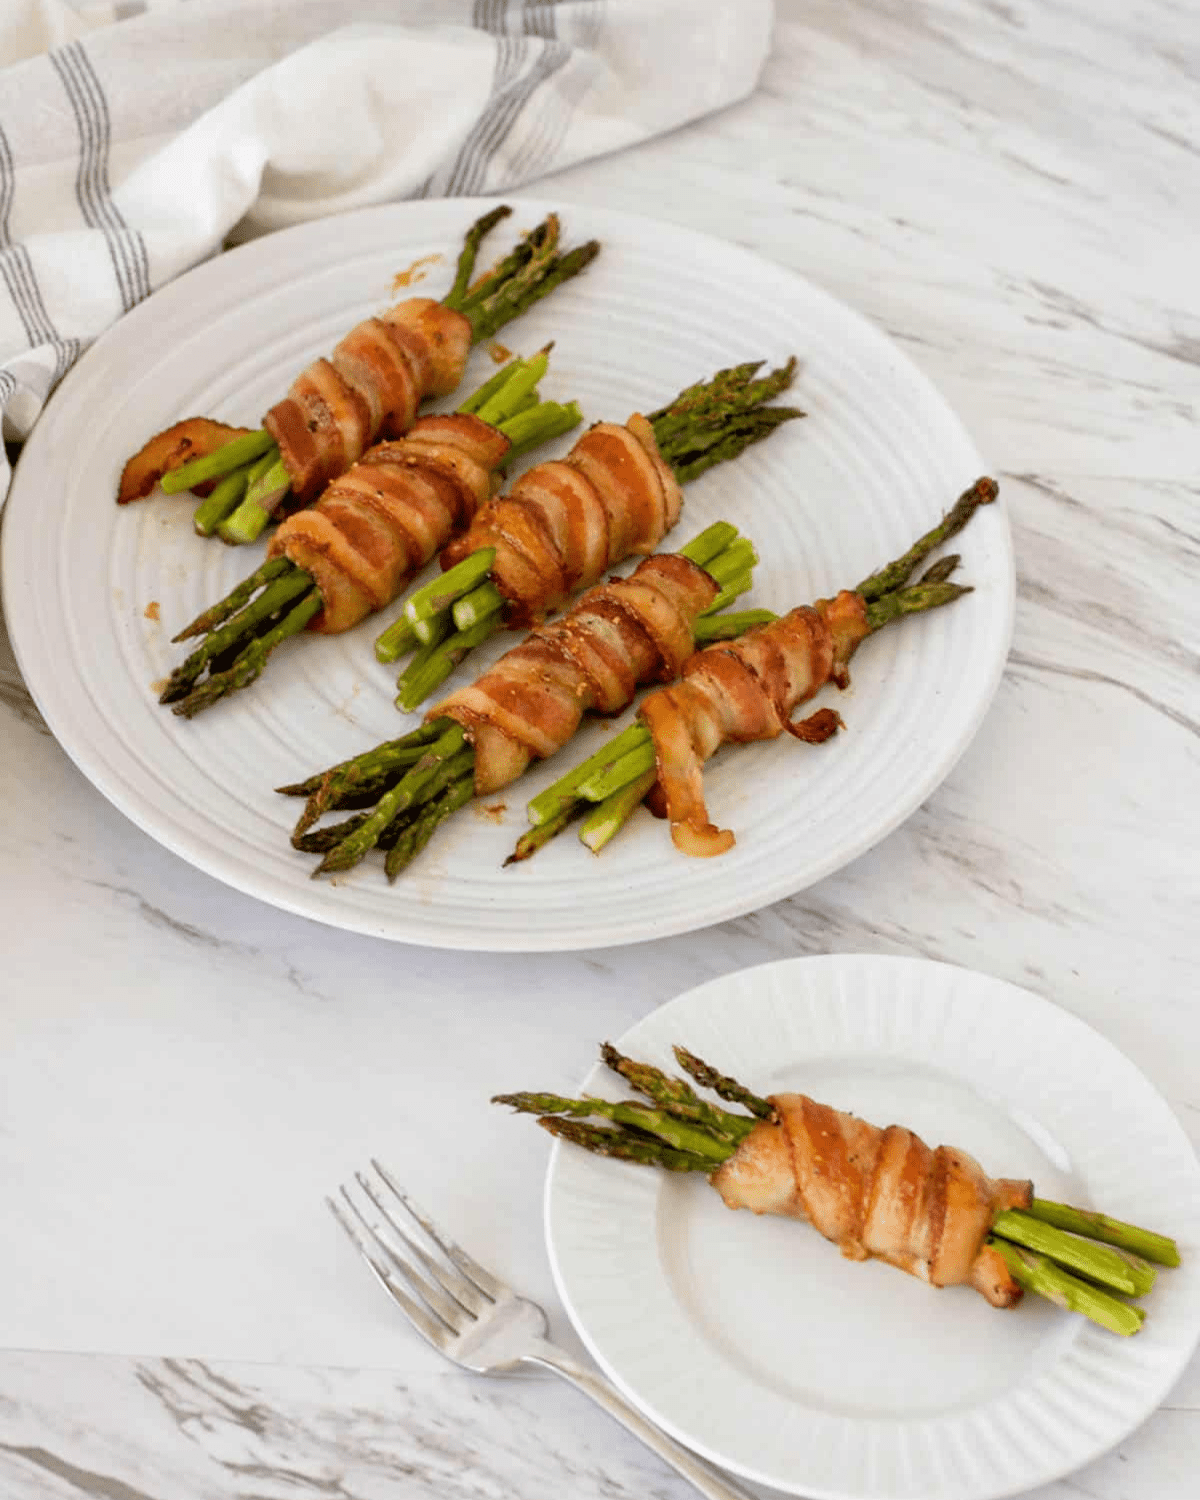 Asparagus bundles with bacon